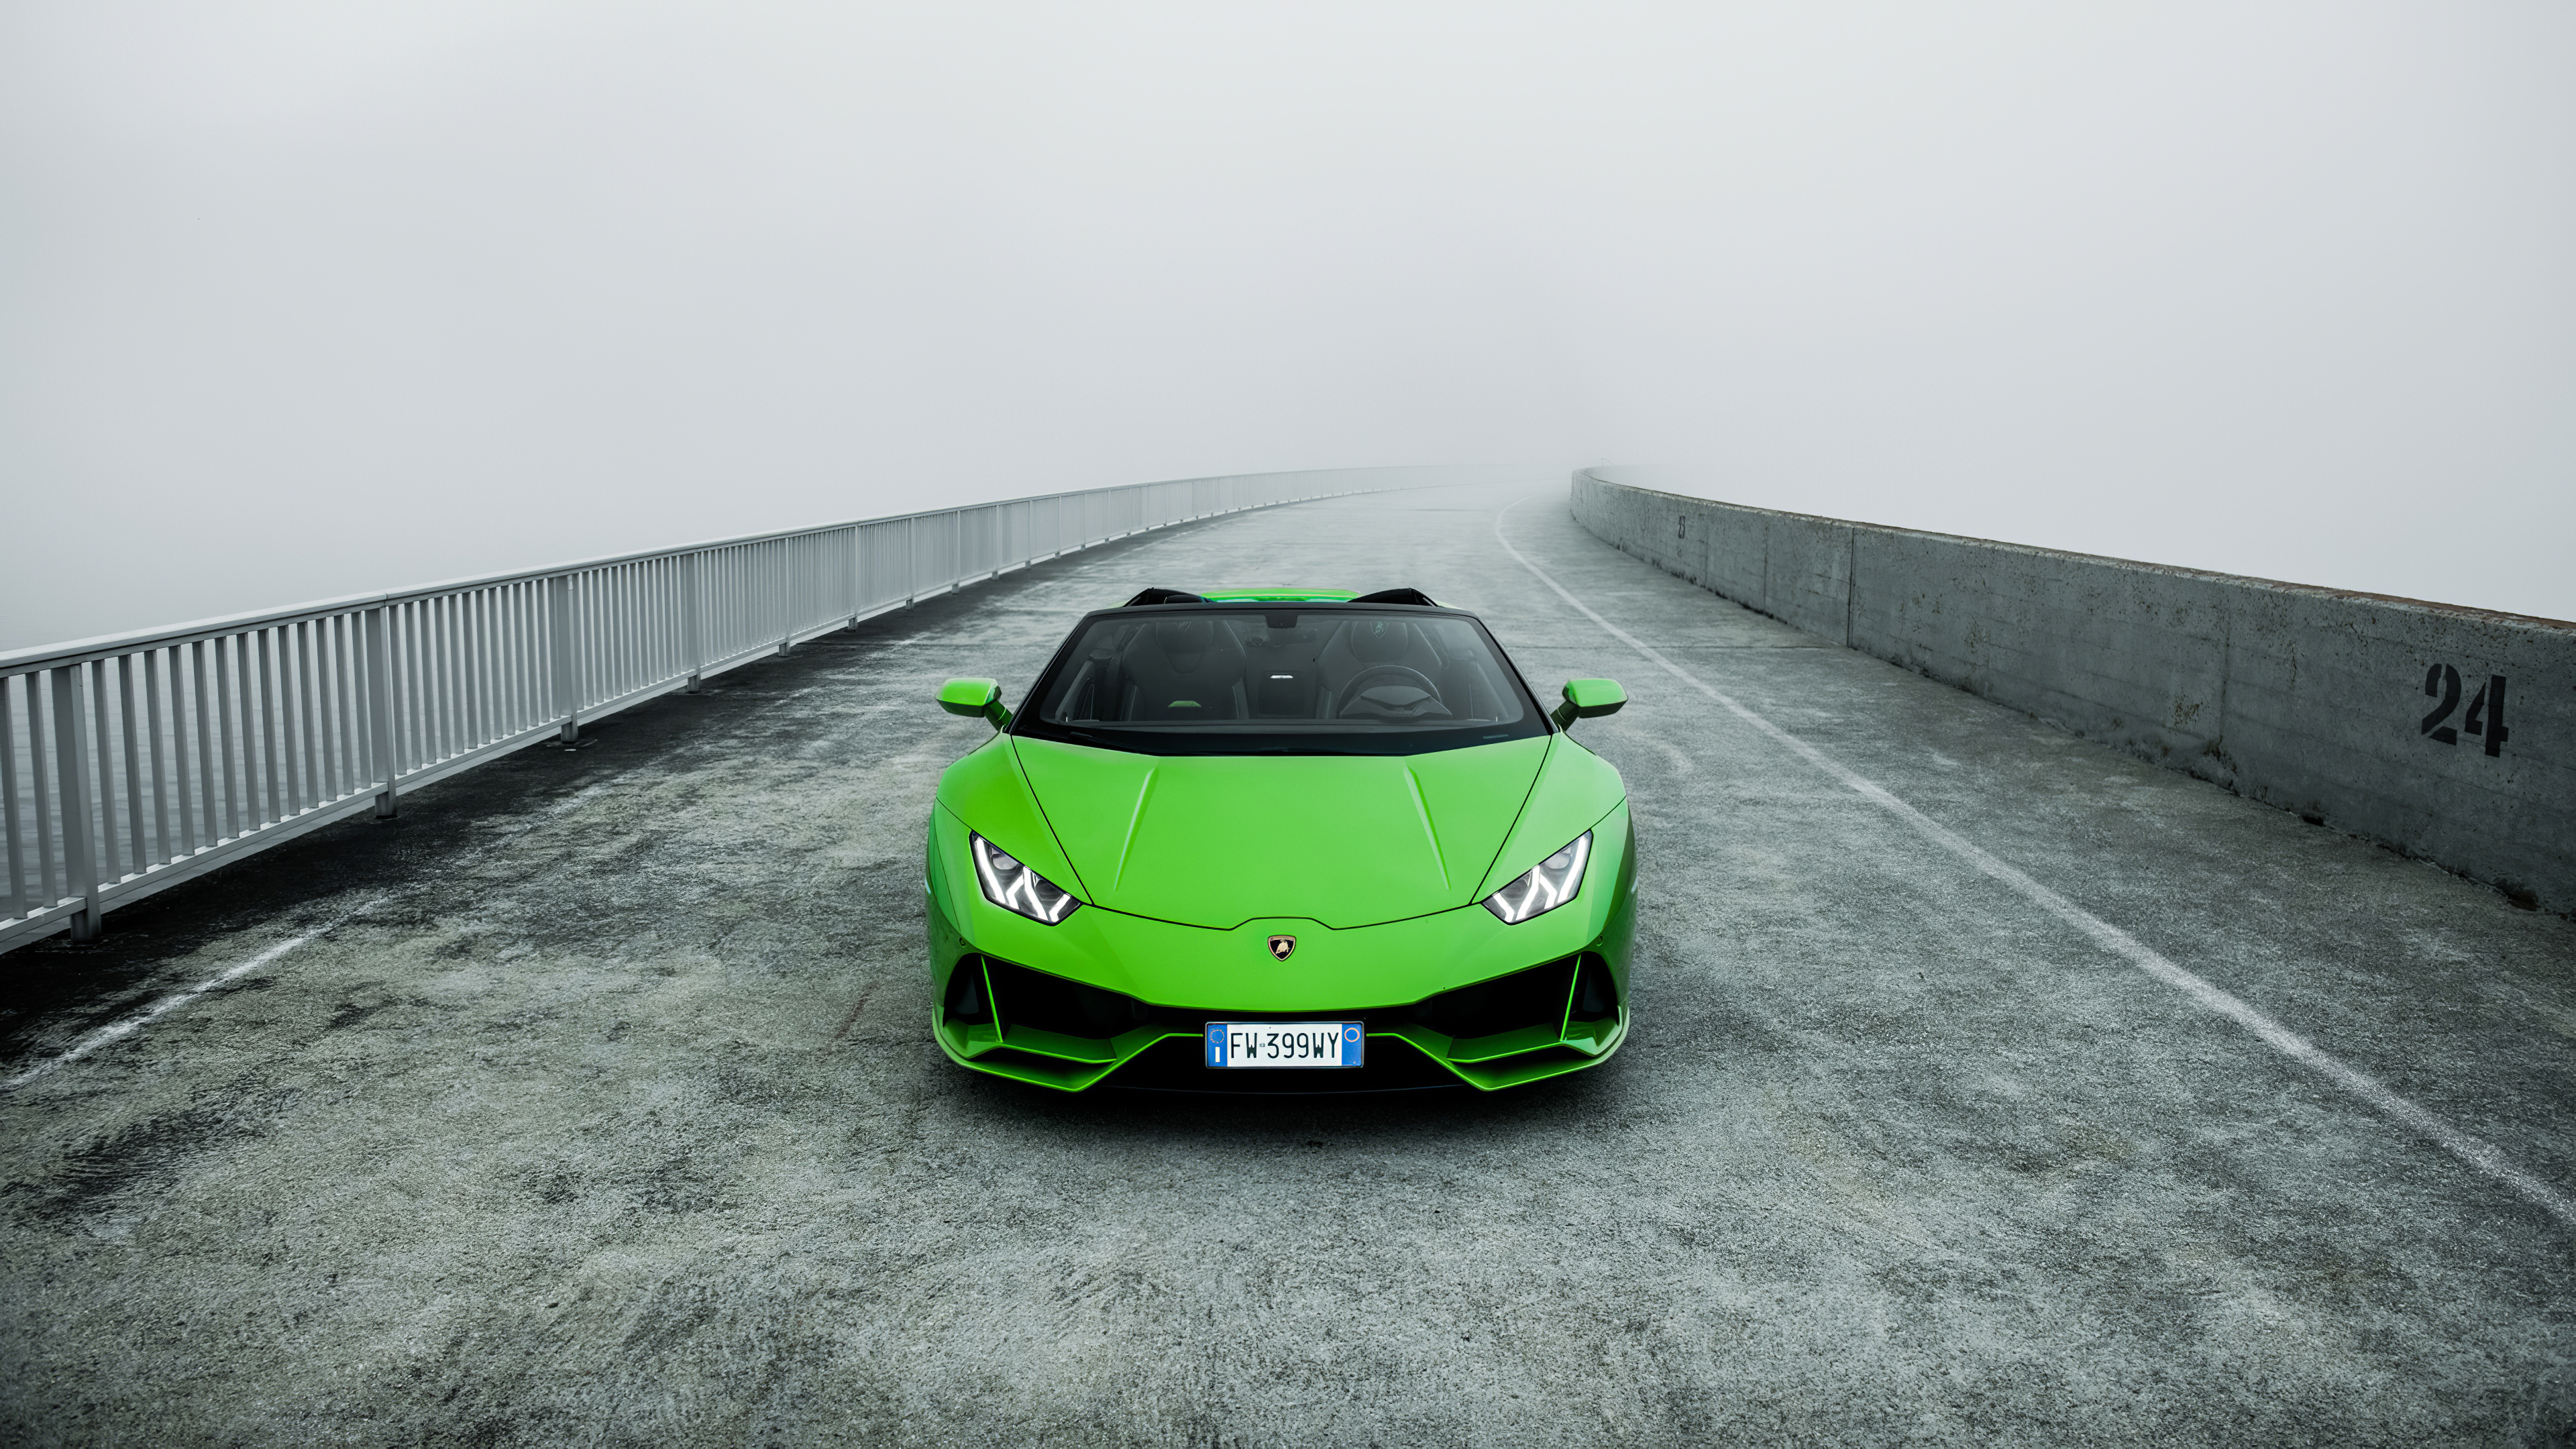 Lamborghini Huracan, Auto beauty, Powerful performance, Exquisite design, 3840x2160 4K Desktop